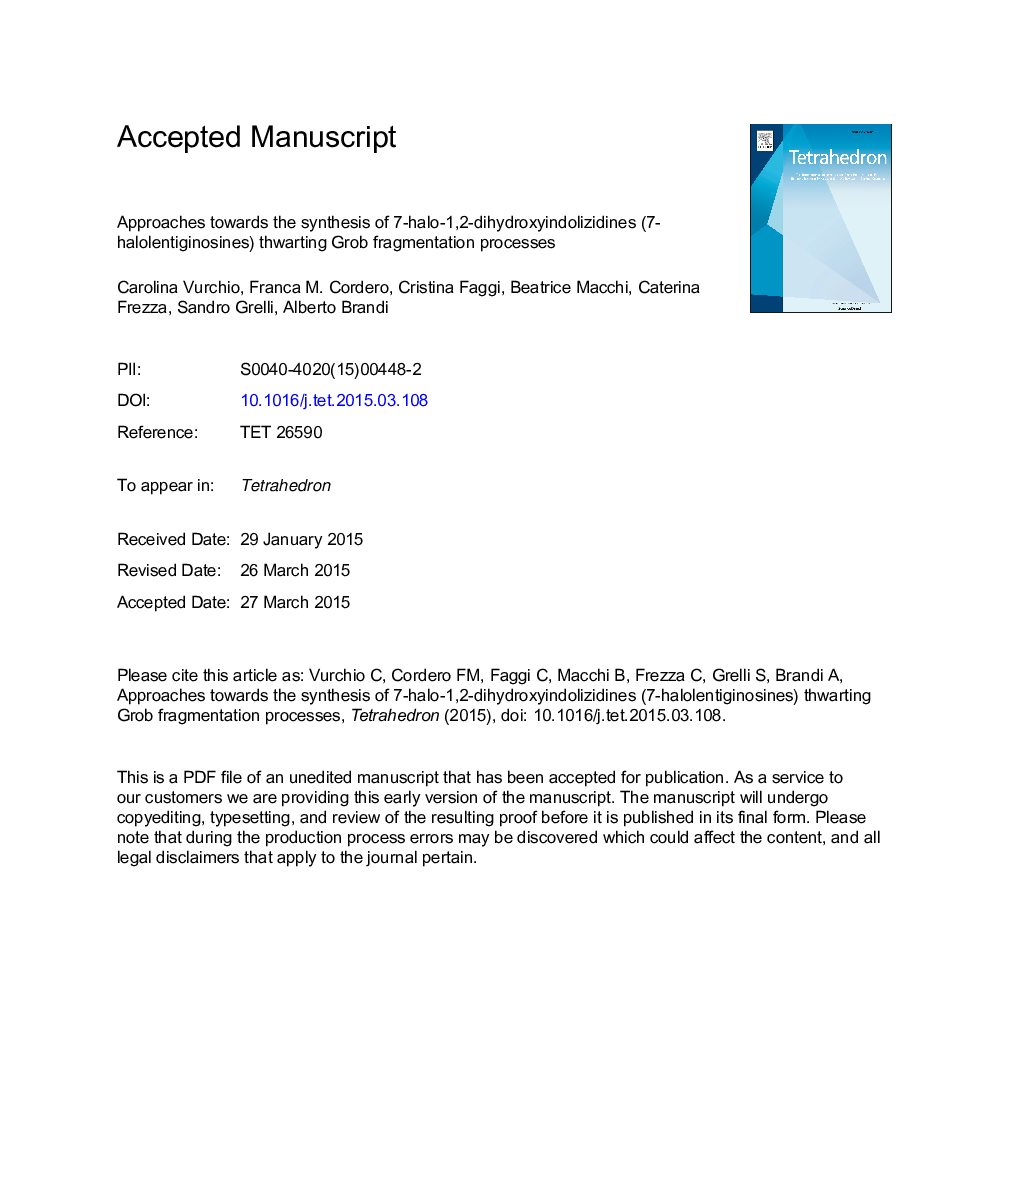 Approaches towards the synthesis of 7-halo-1,2-dihydroxyindolizidines (7-halolentiginosines) thwarting Grob fragmentation processes